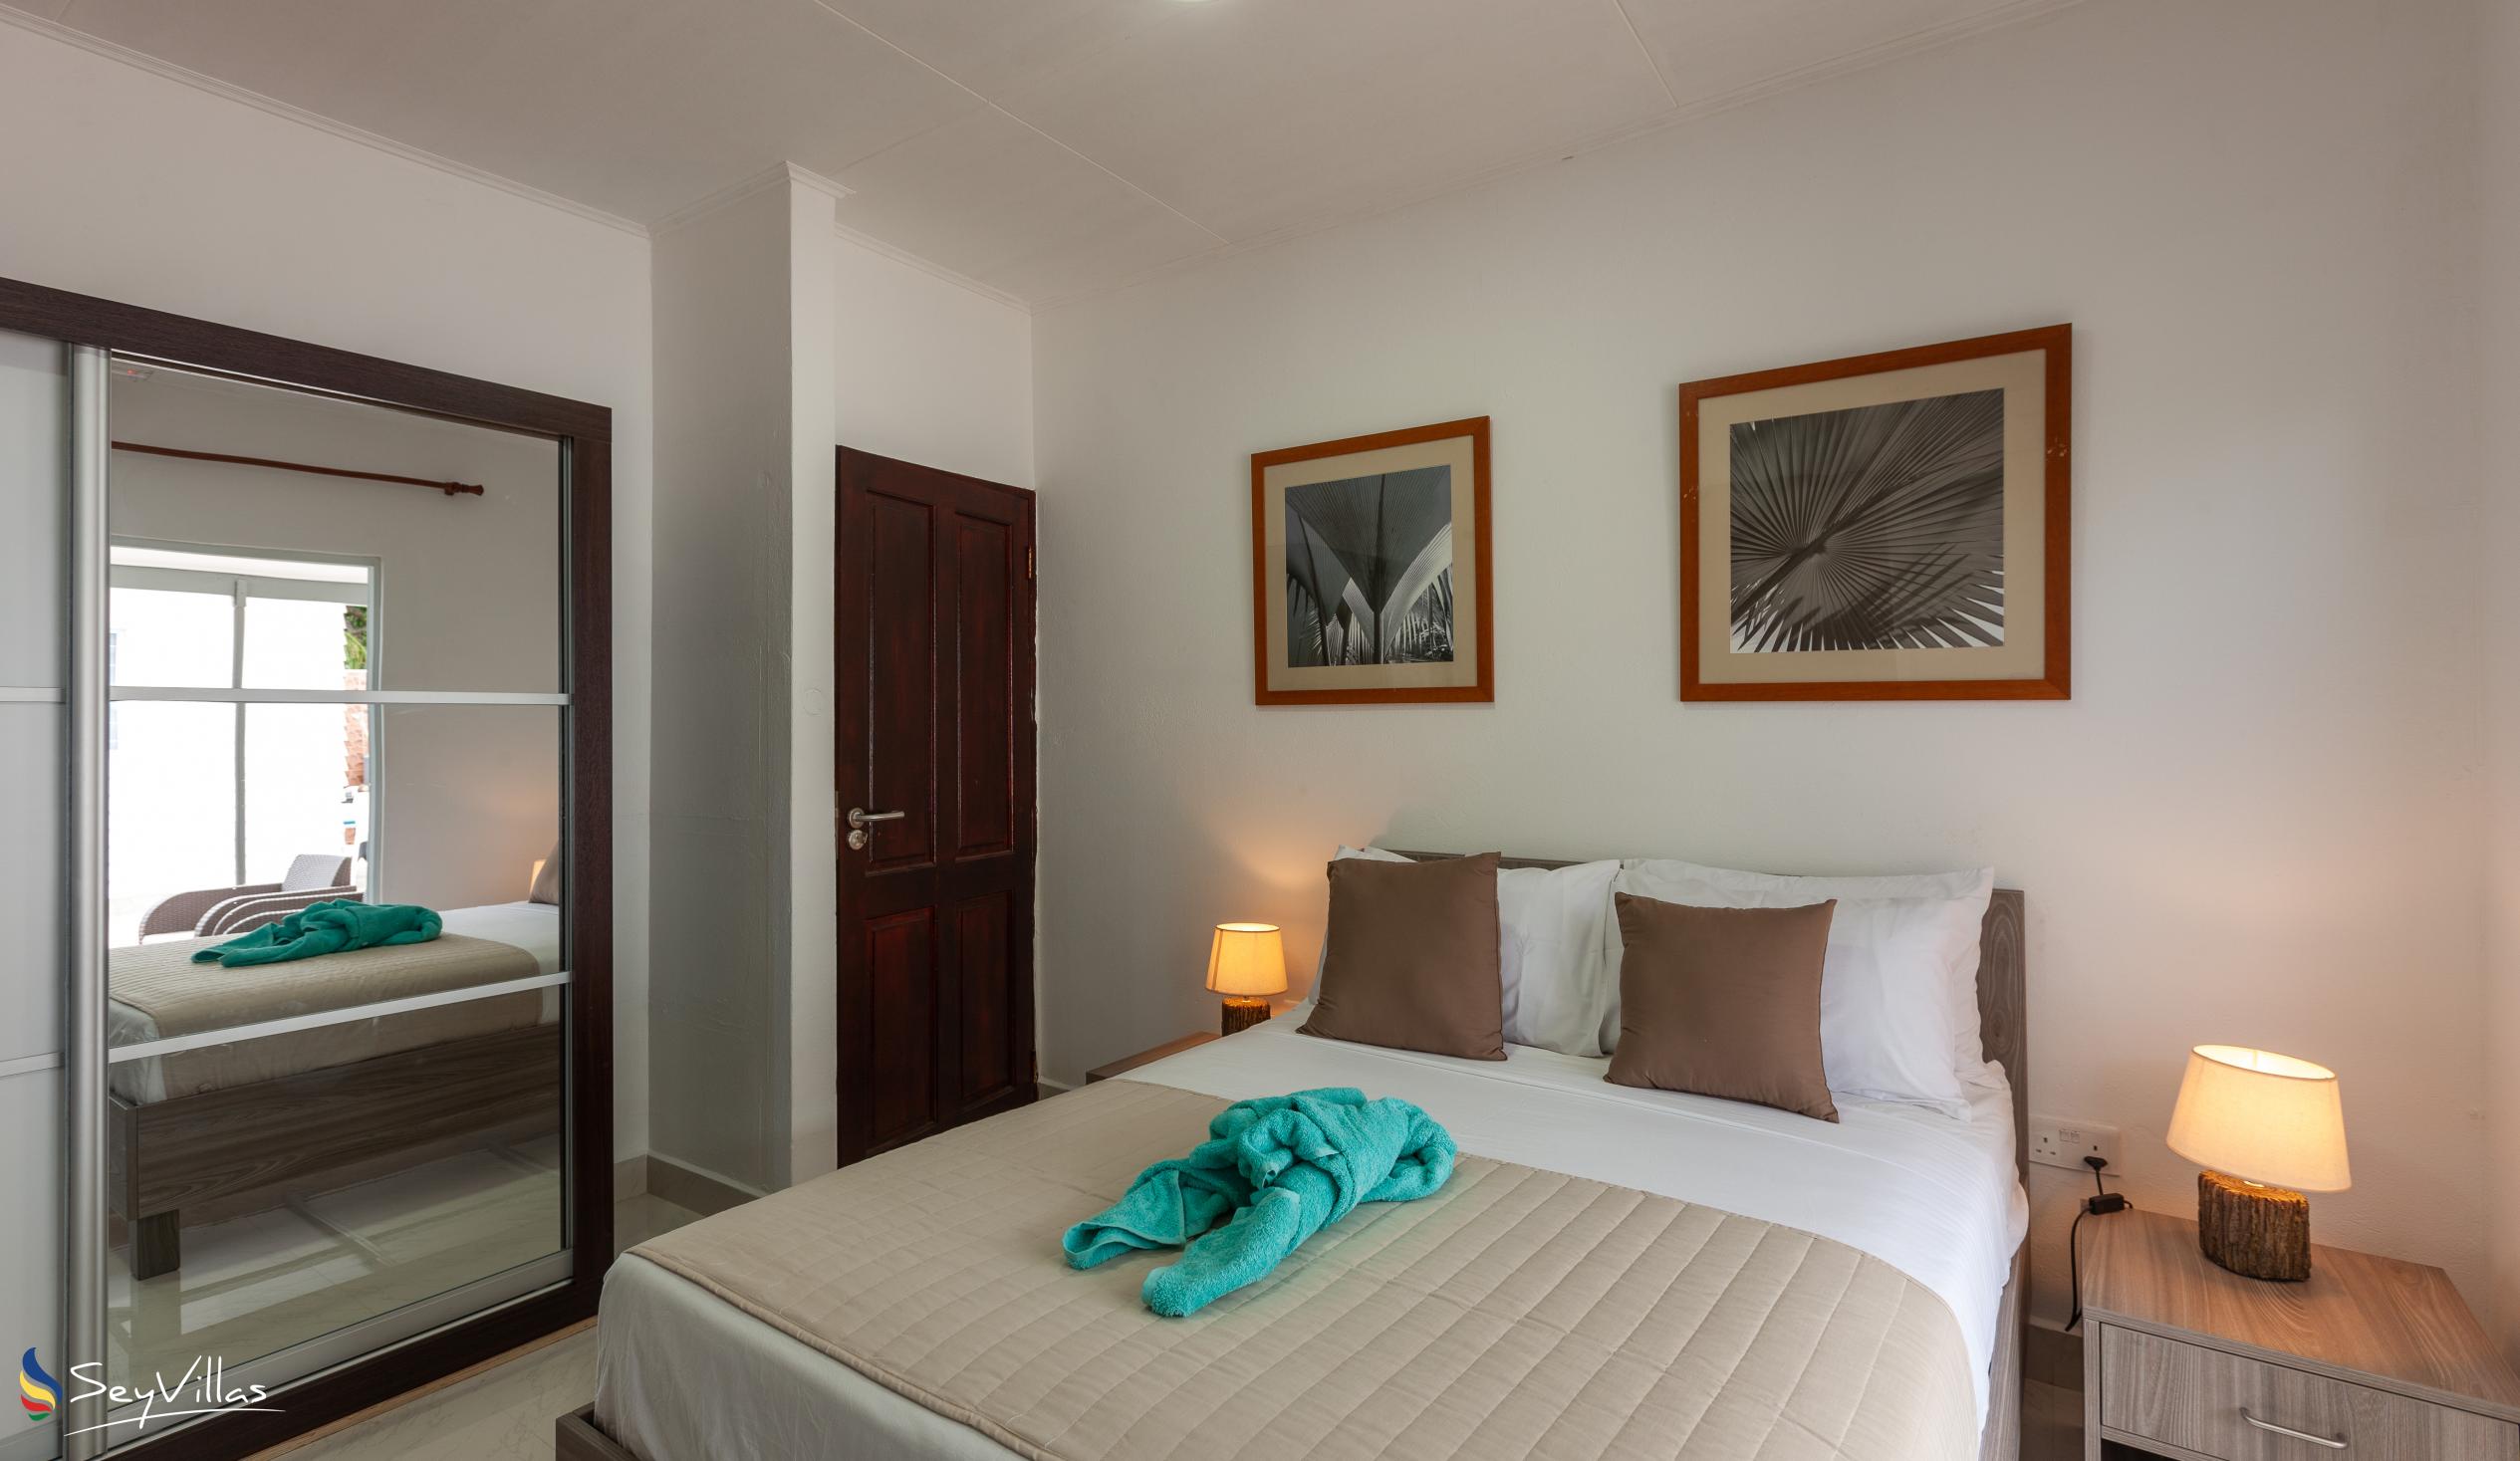 Foto 48: Hotel Plein Soleil - Chambre familiale - Praslin (Seychelles)